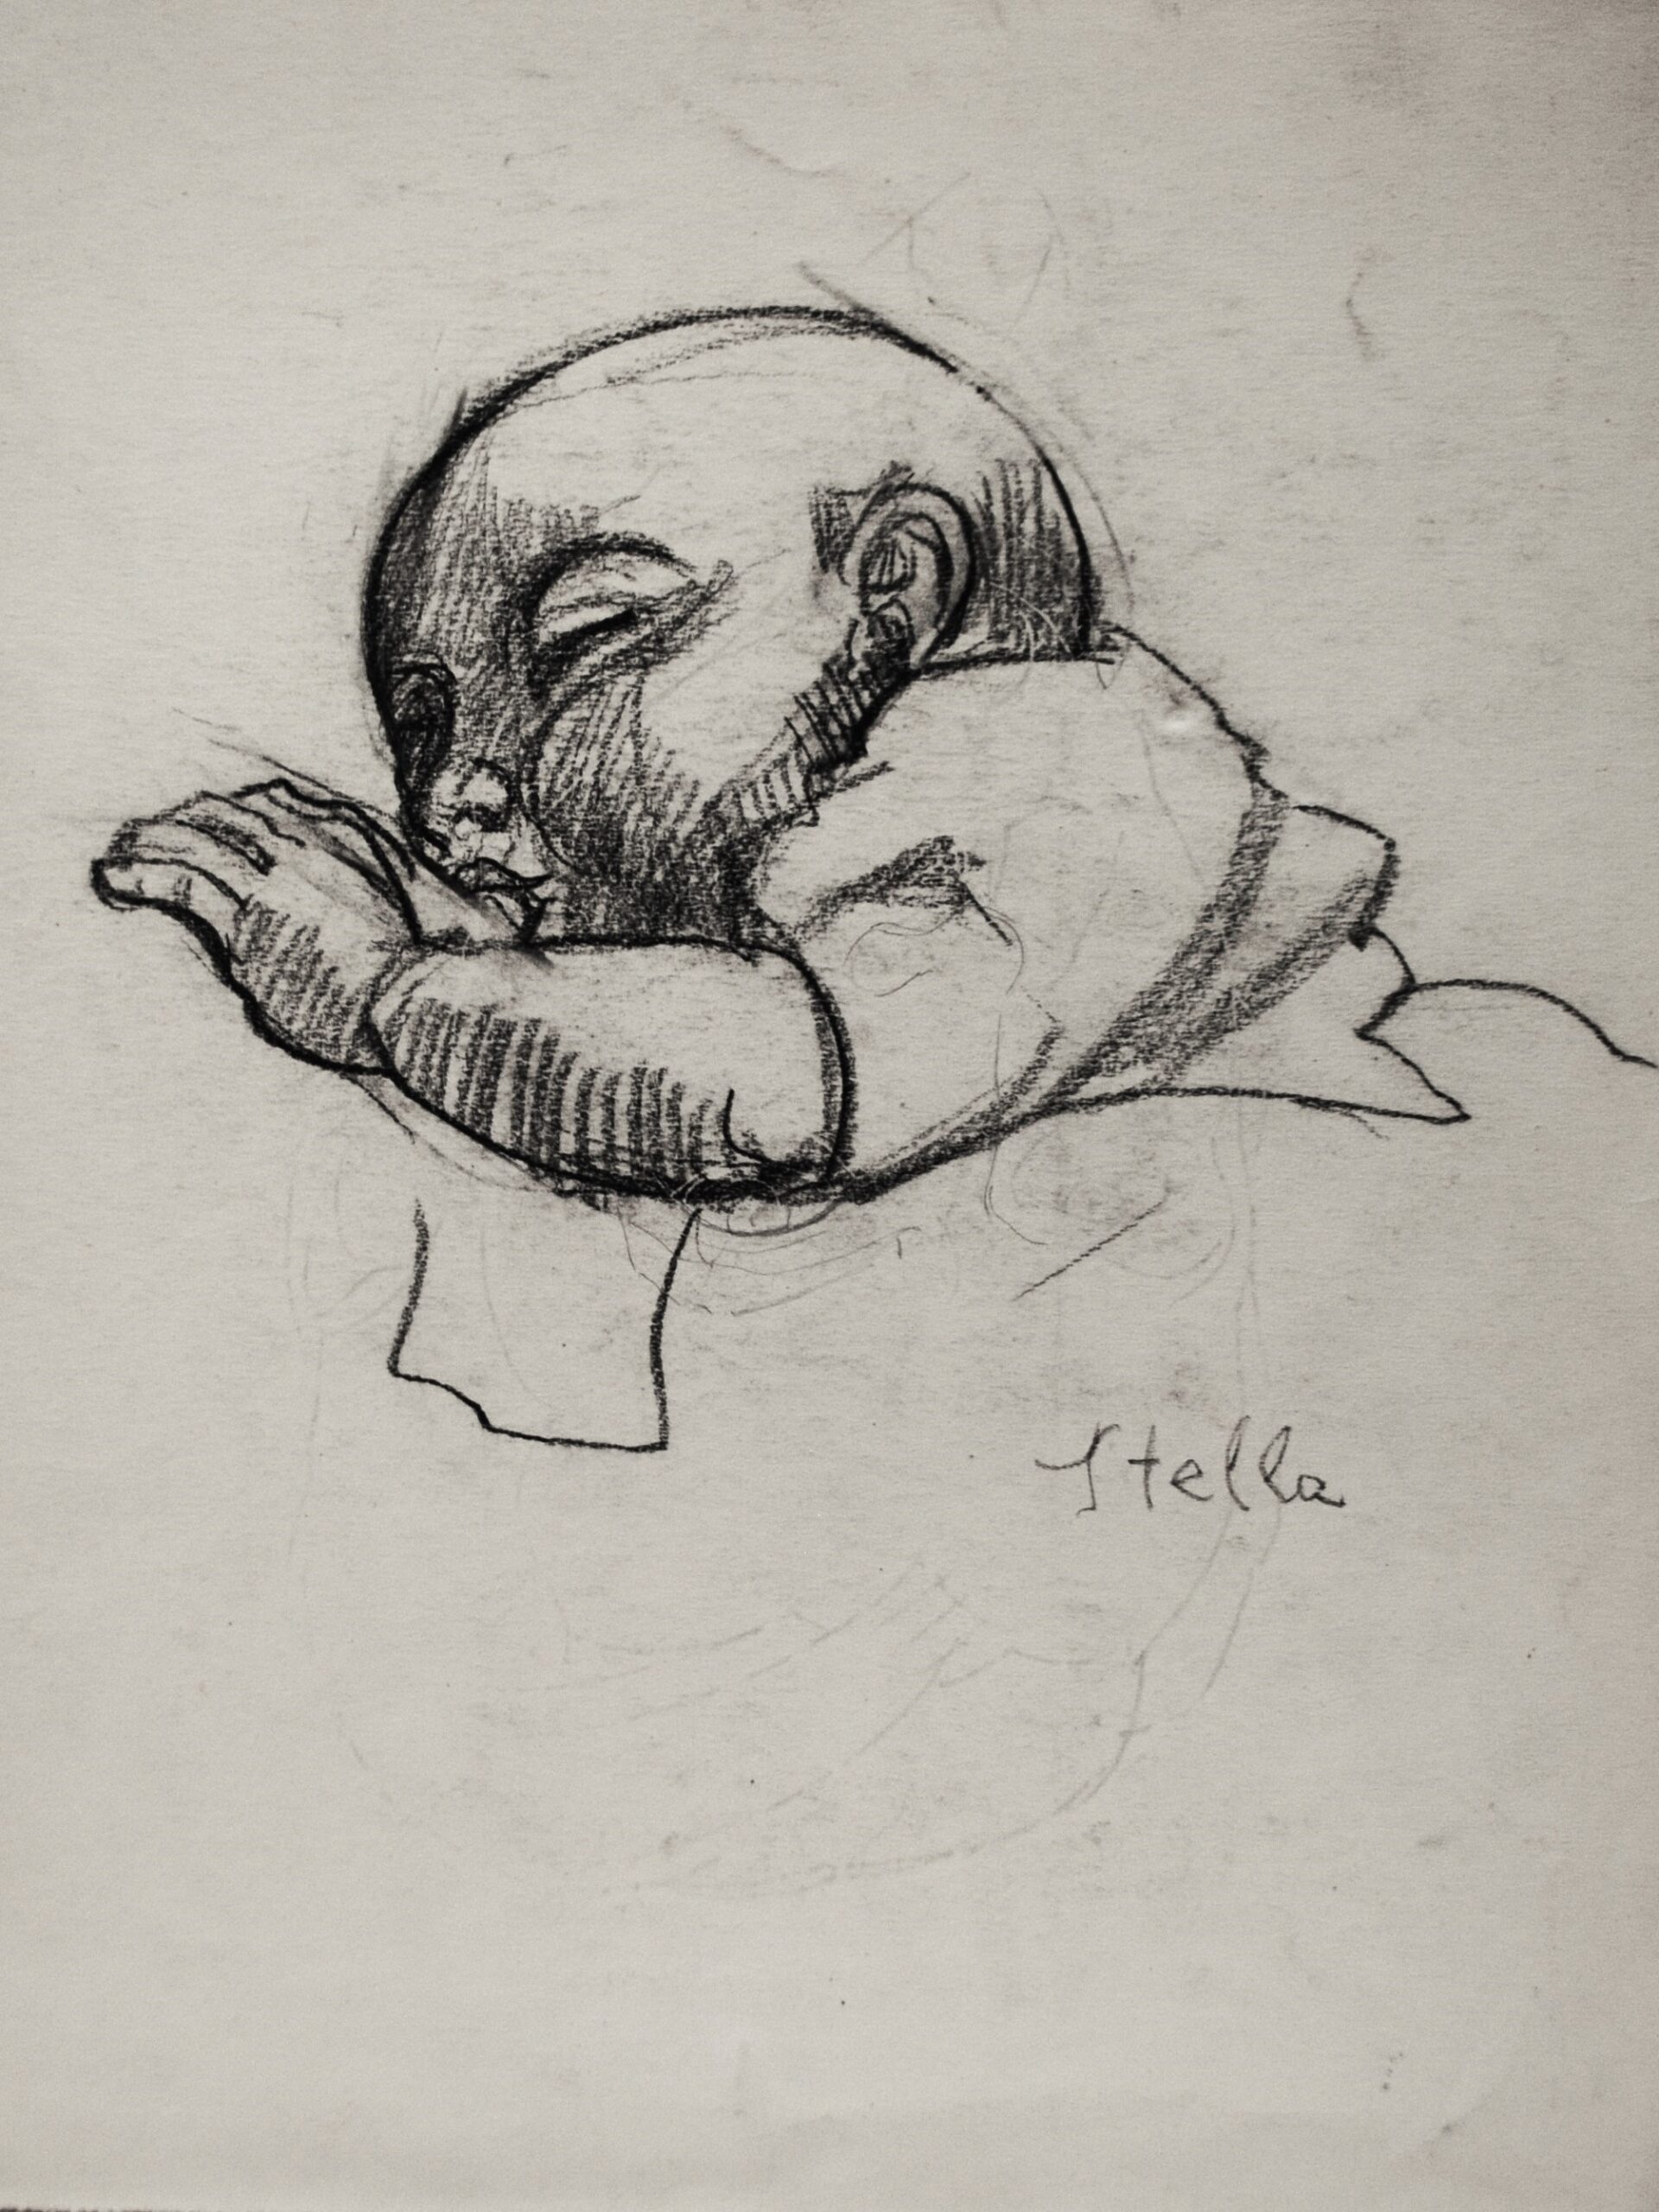 Dibujo de José Manaut titulado Stella, 1941. Carboncillo sobre papel.